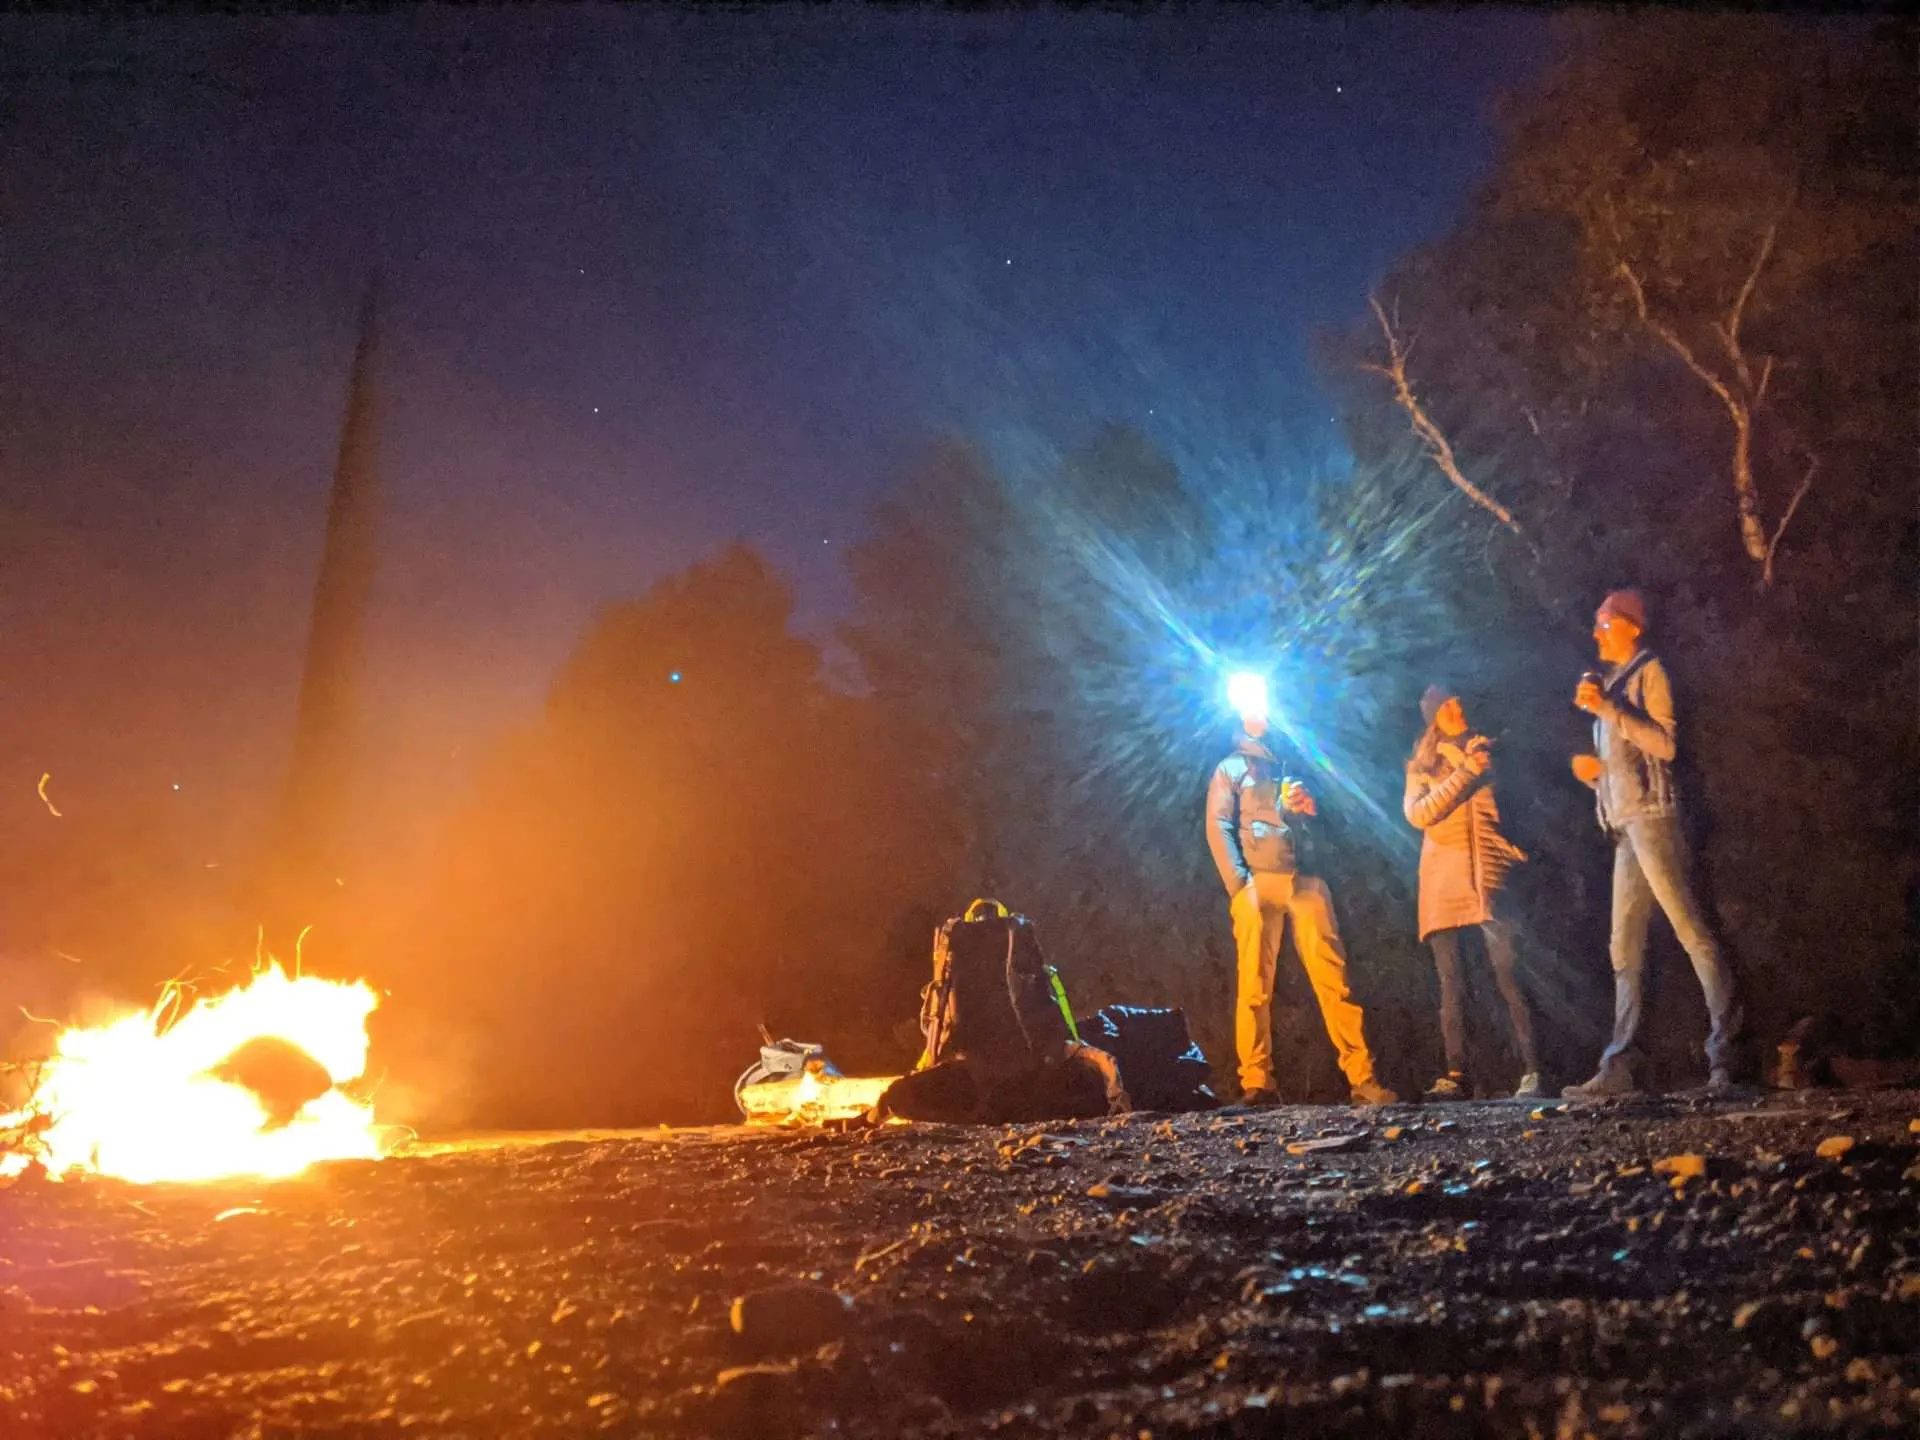 Night time campfire